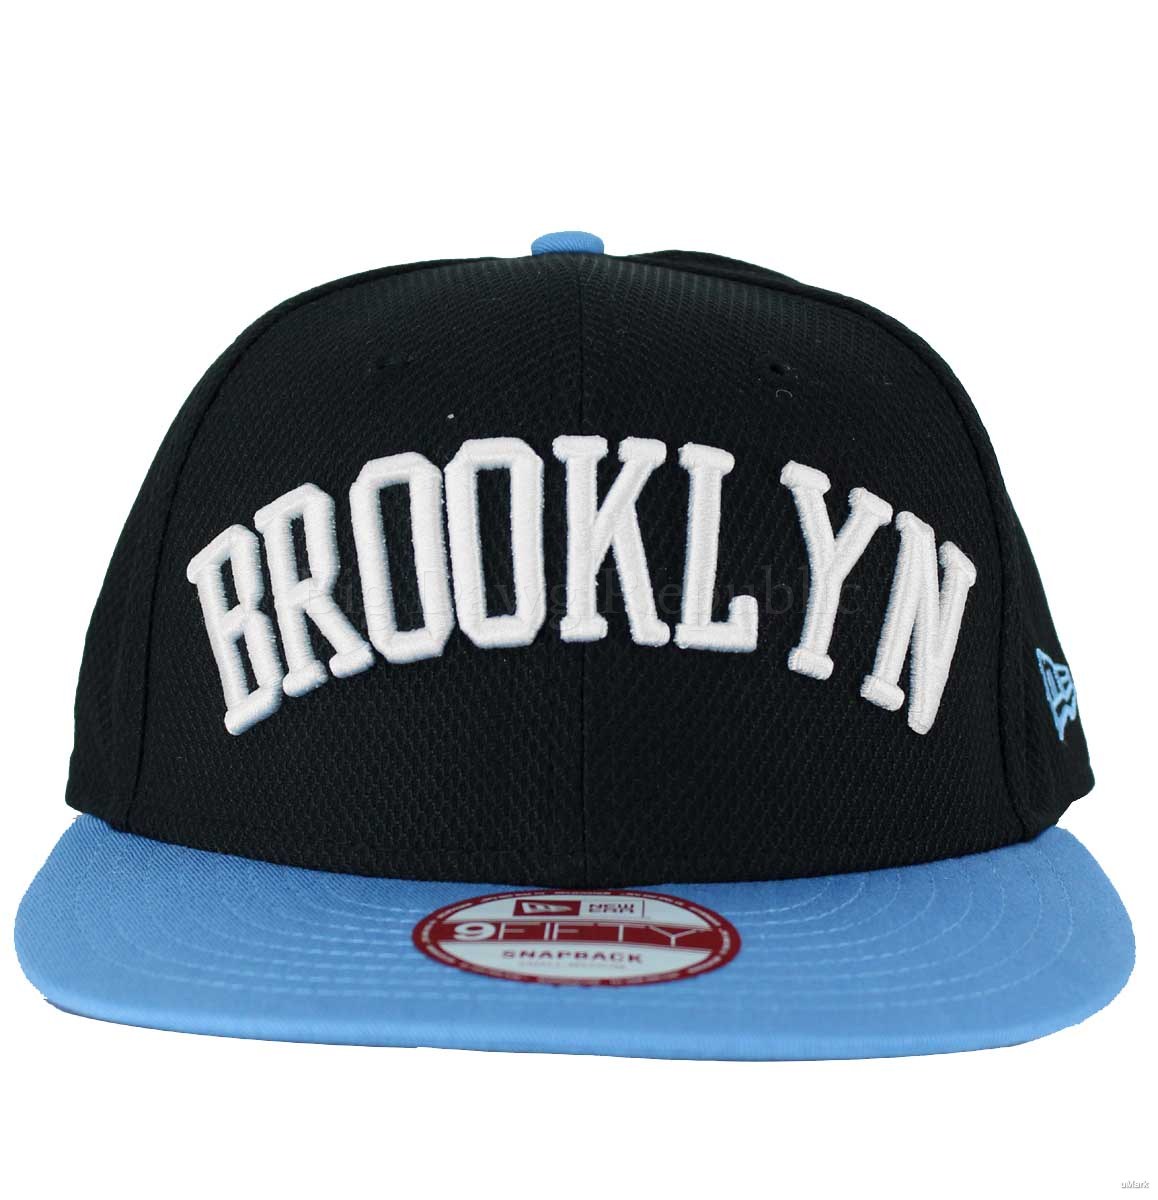 New Era MLB 9Fifty Brooklyn Dodgers Authentic On Field Snapback Caps